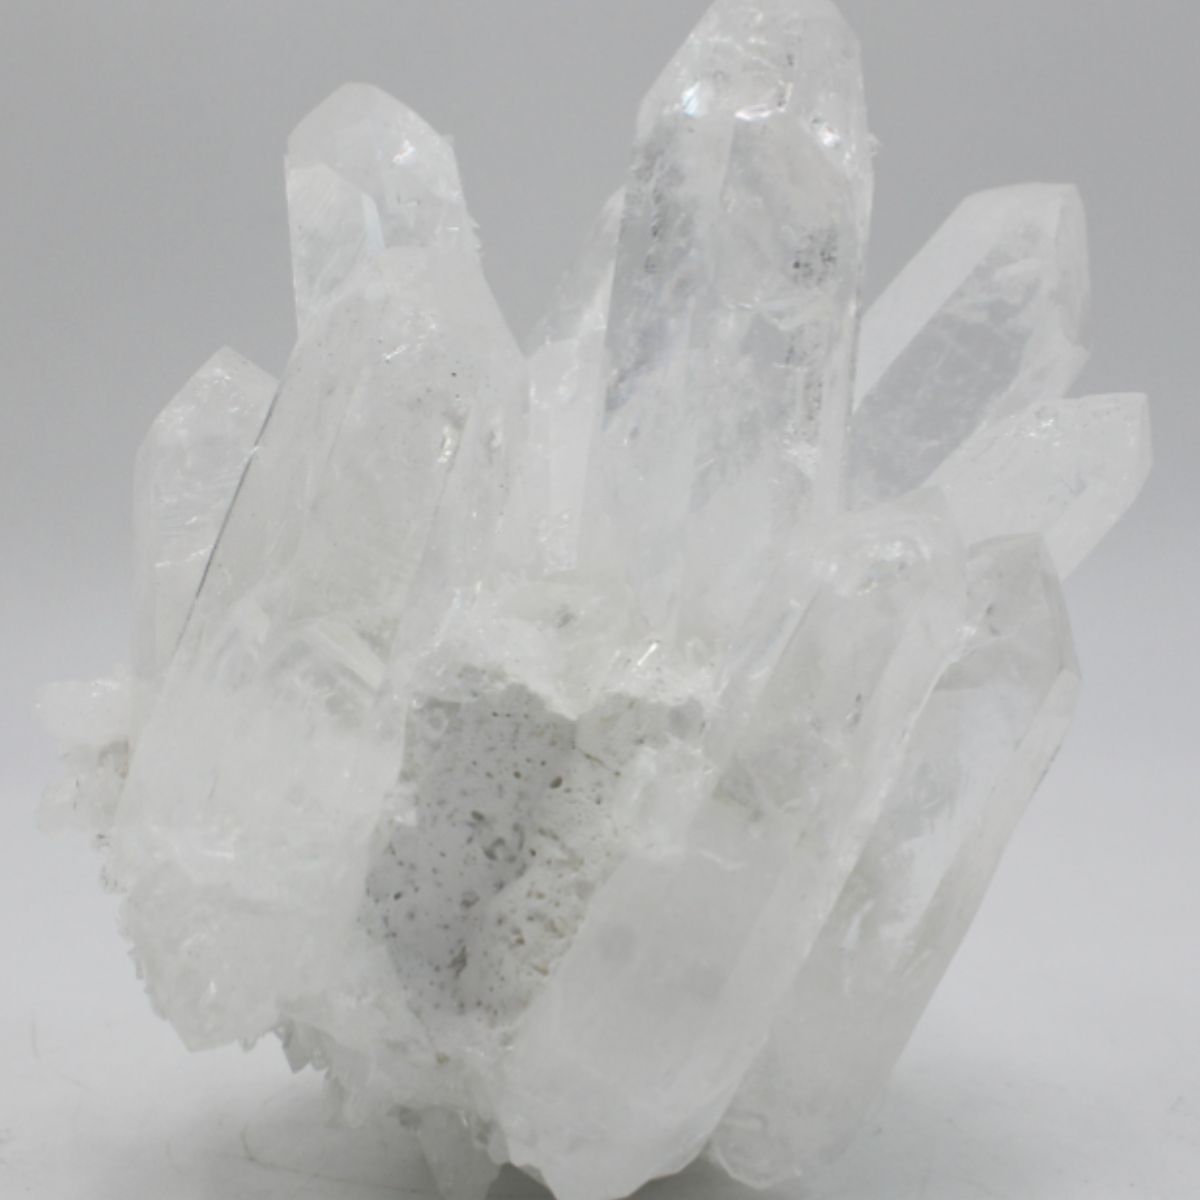 Iceland Spar Rough Mineral Stone 30-50g